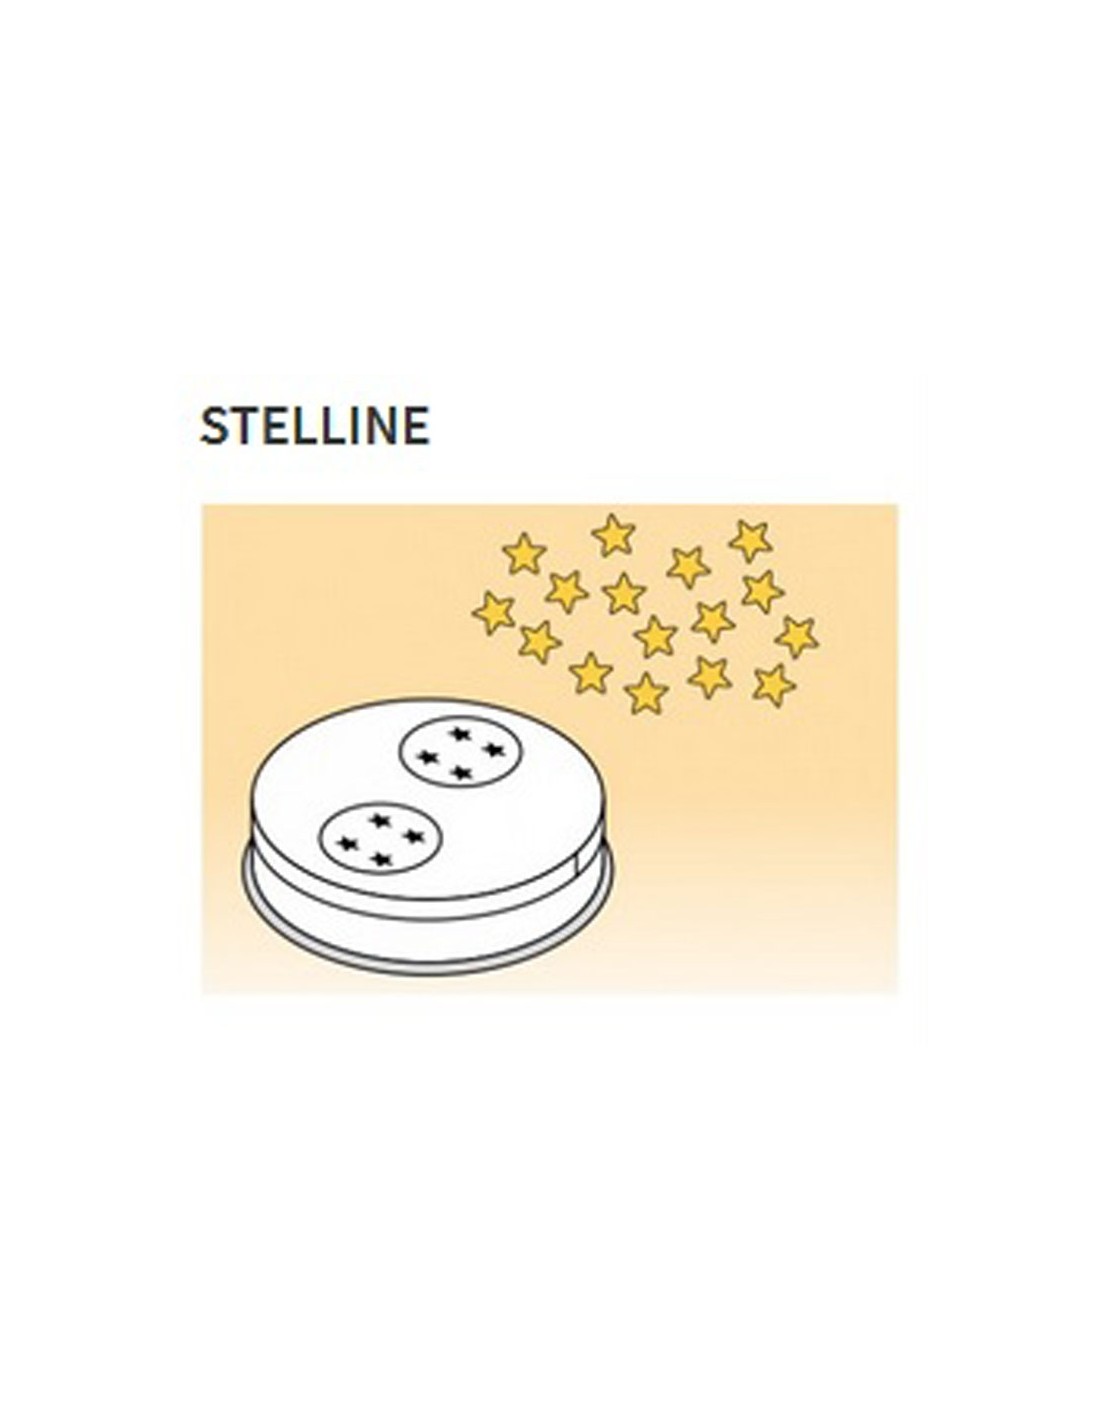 Matrices de aleación de latón de varias formas - Bronce - Para máquina de pasta fresca modelo MPF8N - Stelline mm 5